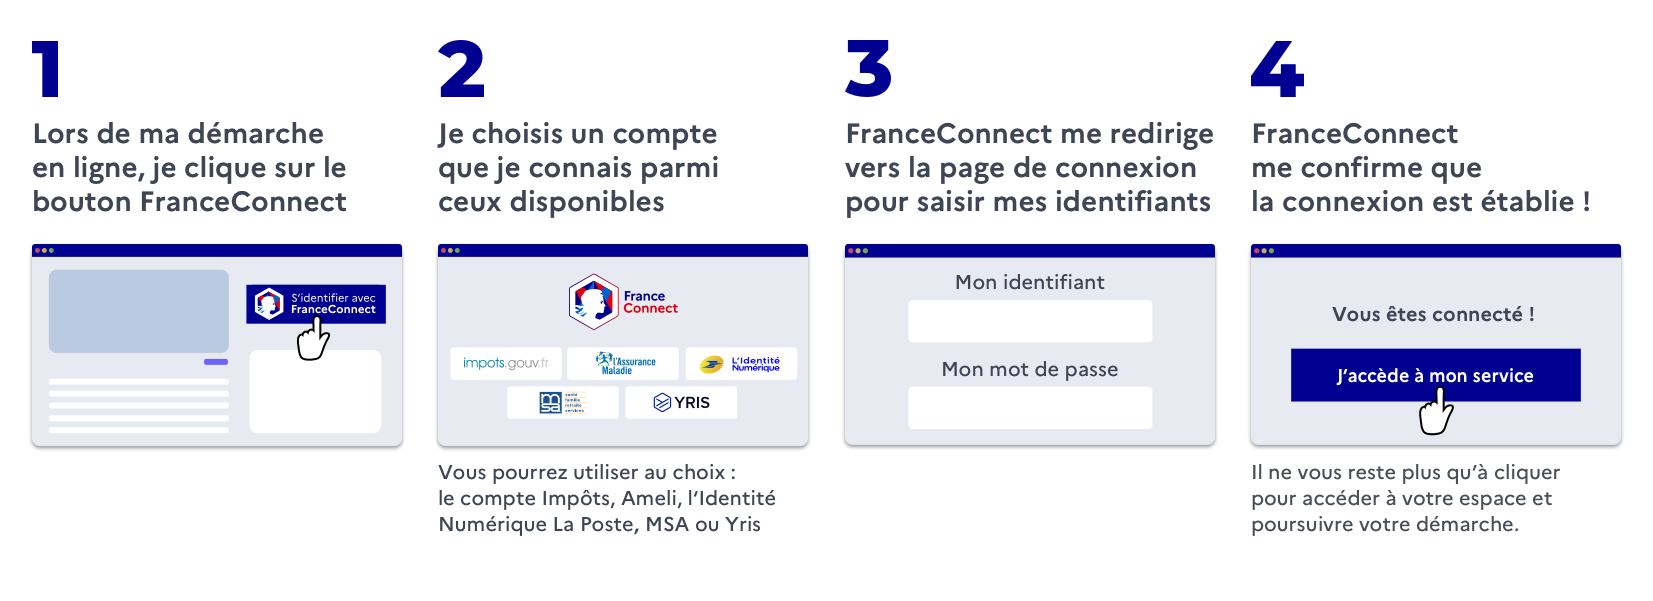 Franceconnect Faq